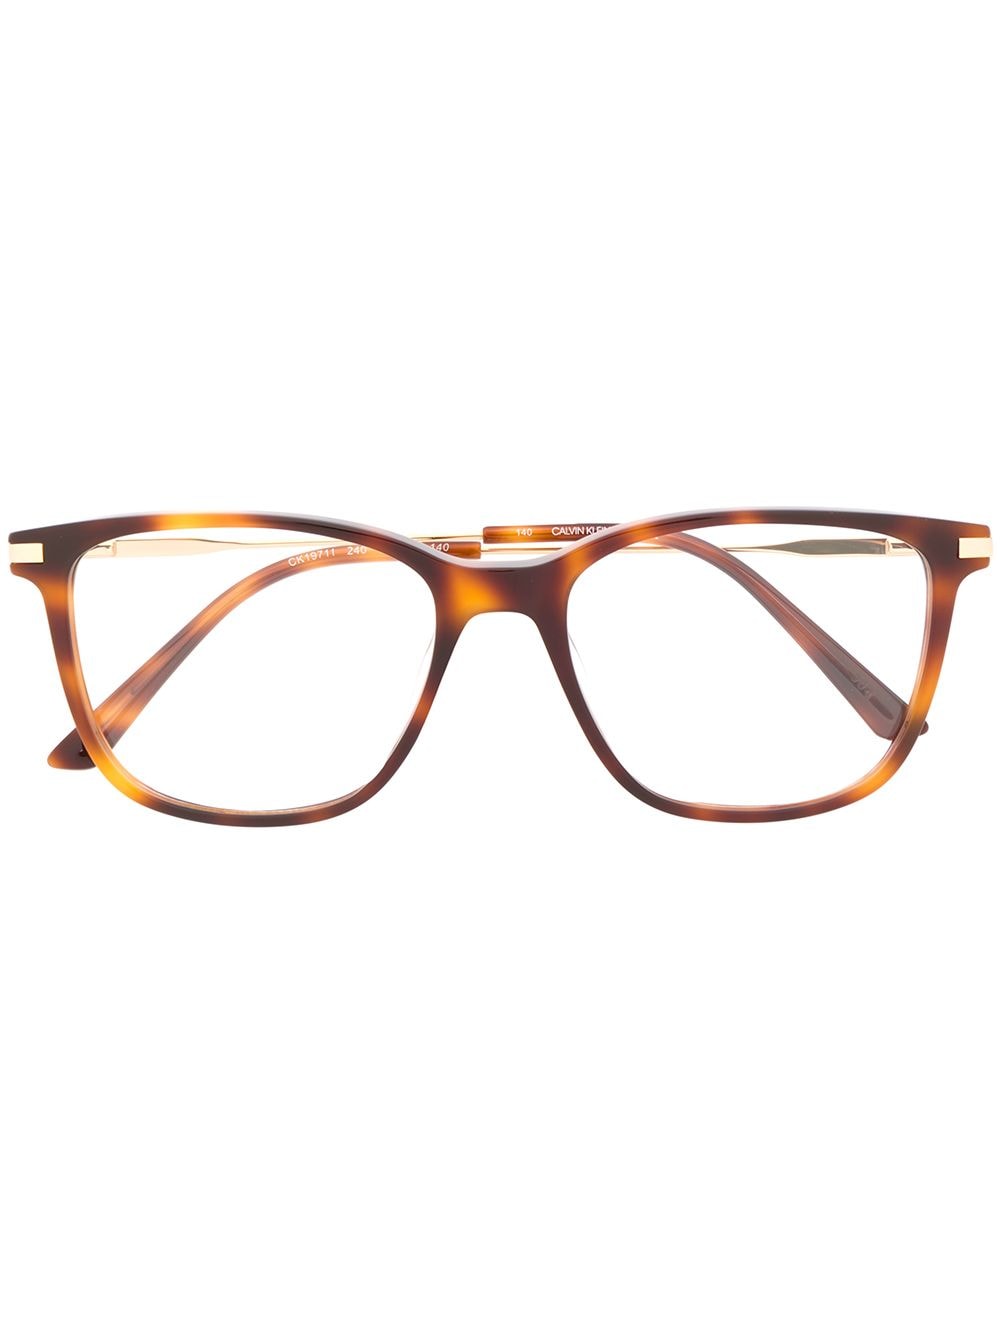 Calvin Klein очки в квадратной оправе черепаховой расцветки от Calvin Klein